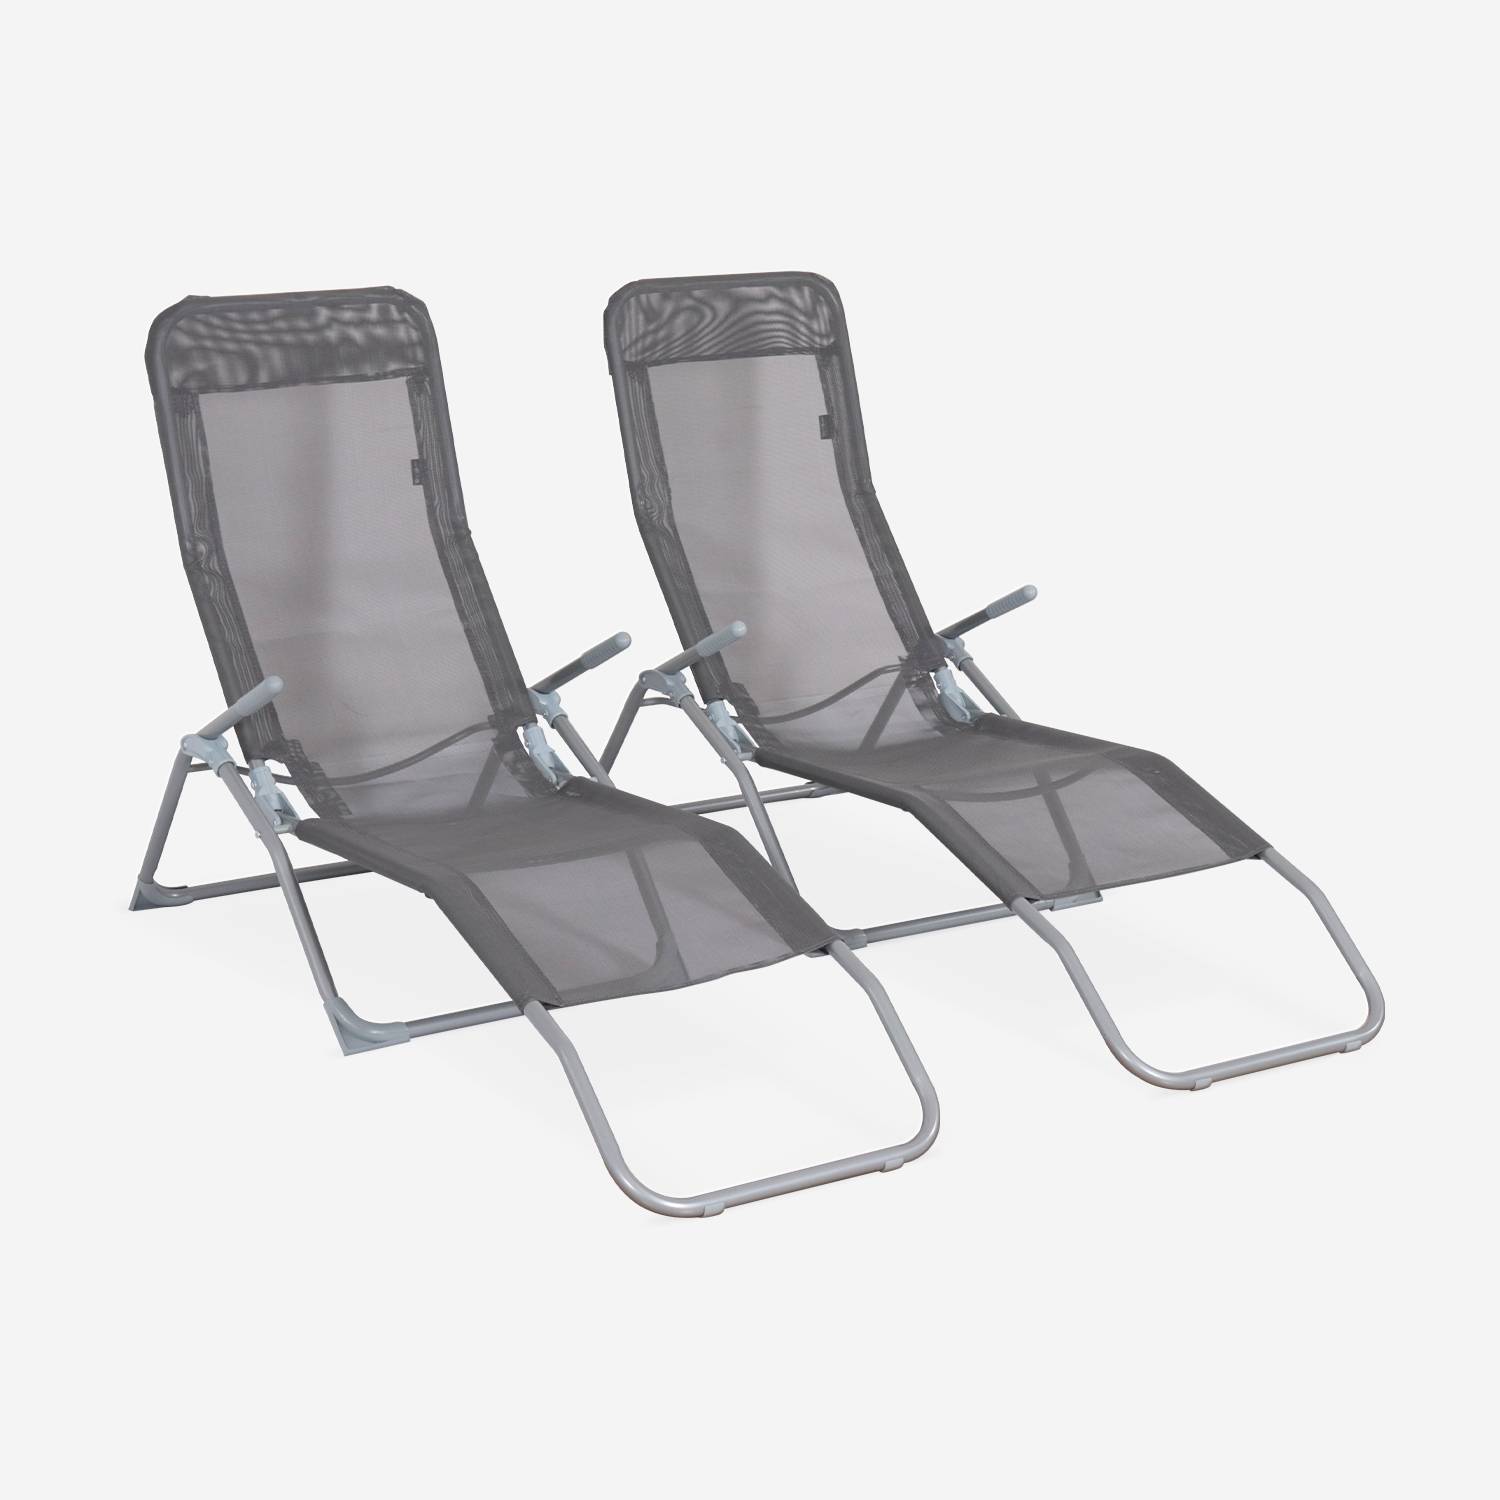 Set van 2 opvouwbare ligstoelen - Levito Anthraciet - Ligstoelen van textileen, 2 posities, opvouwbare ligstoelen Photo2